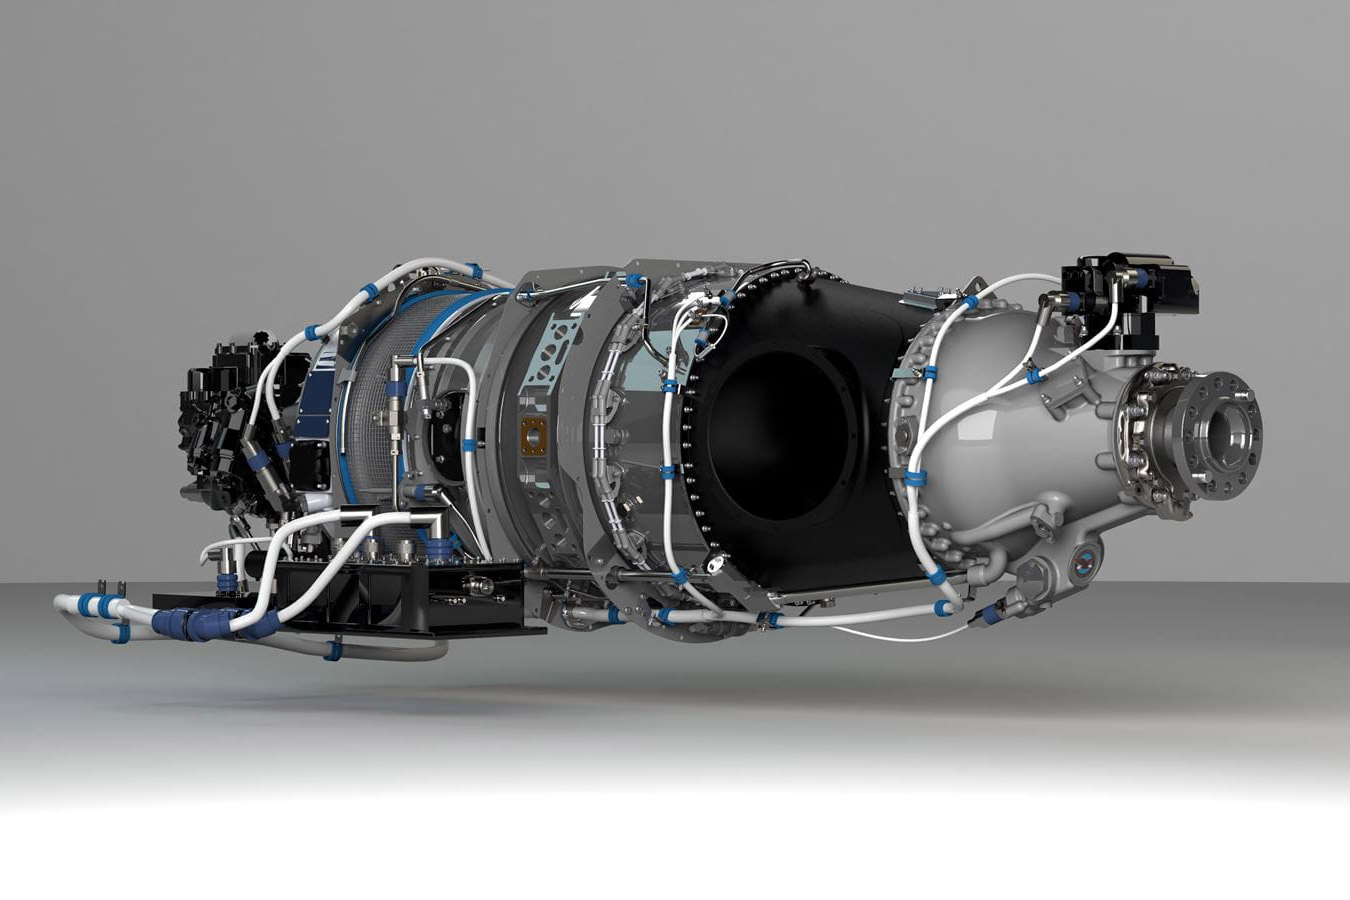 Pratt & Whitney Announces Over 400 PT6 E-Series Engine Family Deliveries, Surpassing 100,000 Flying Hours